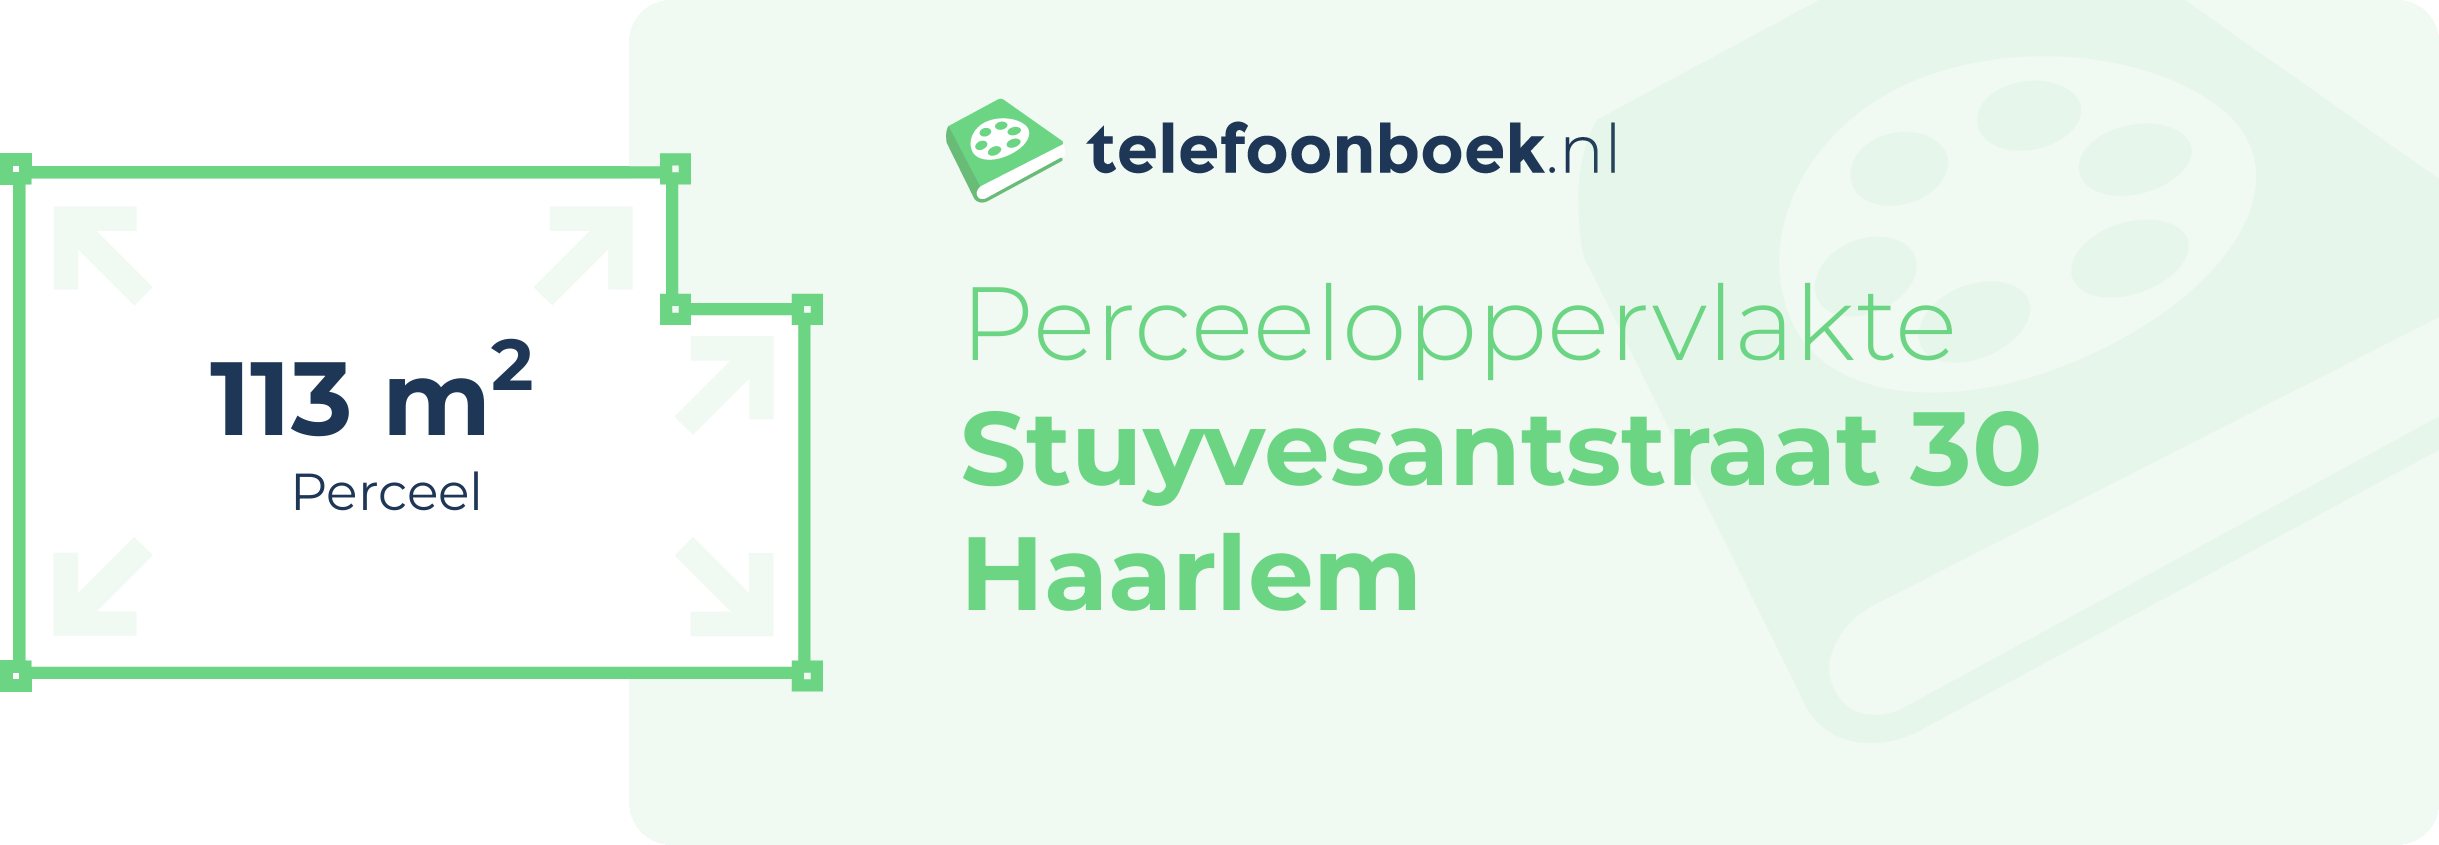 Perceeloppervlakte Stuyvesantstraat 30 Haarlem